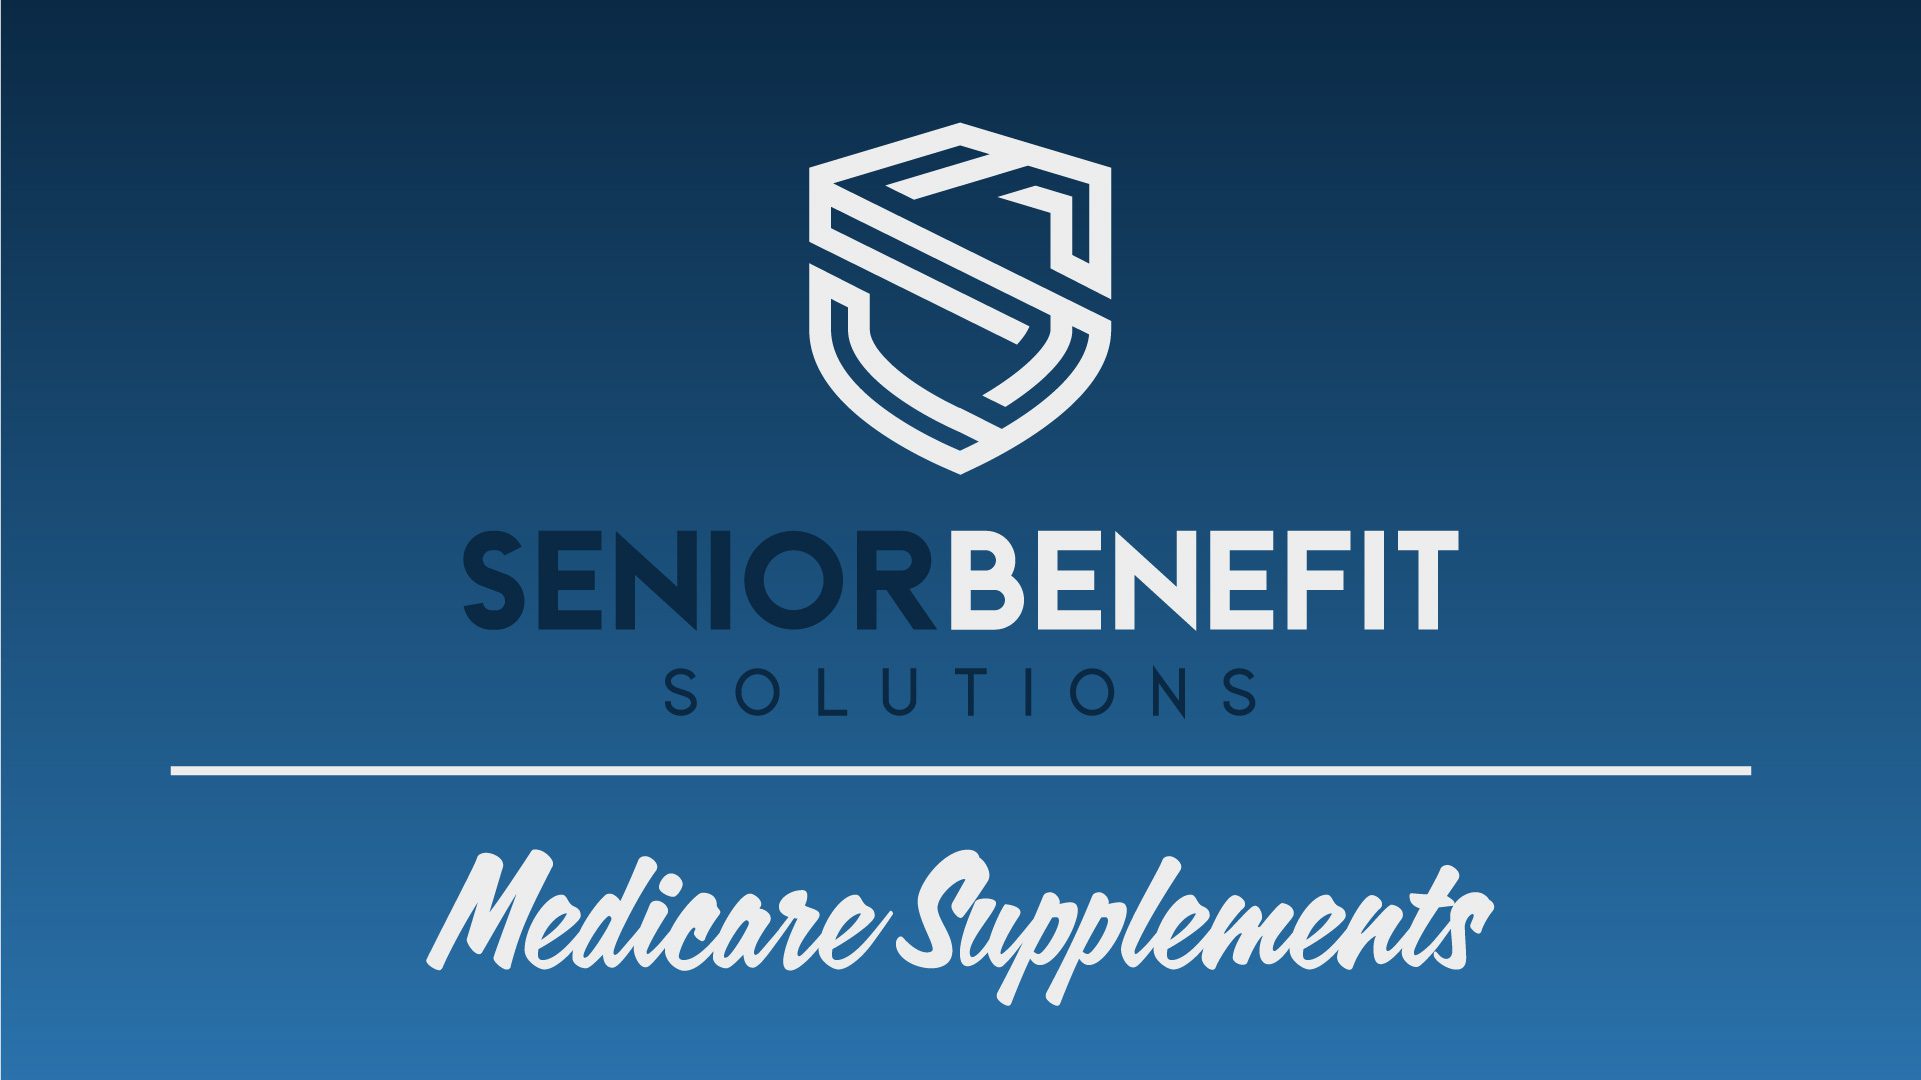 Medicare Supplements; Senior Benefit Solutions